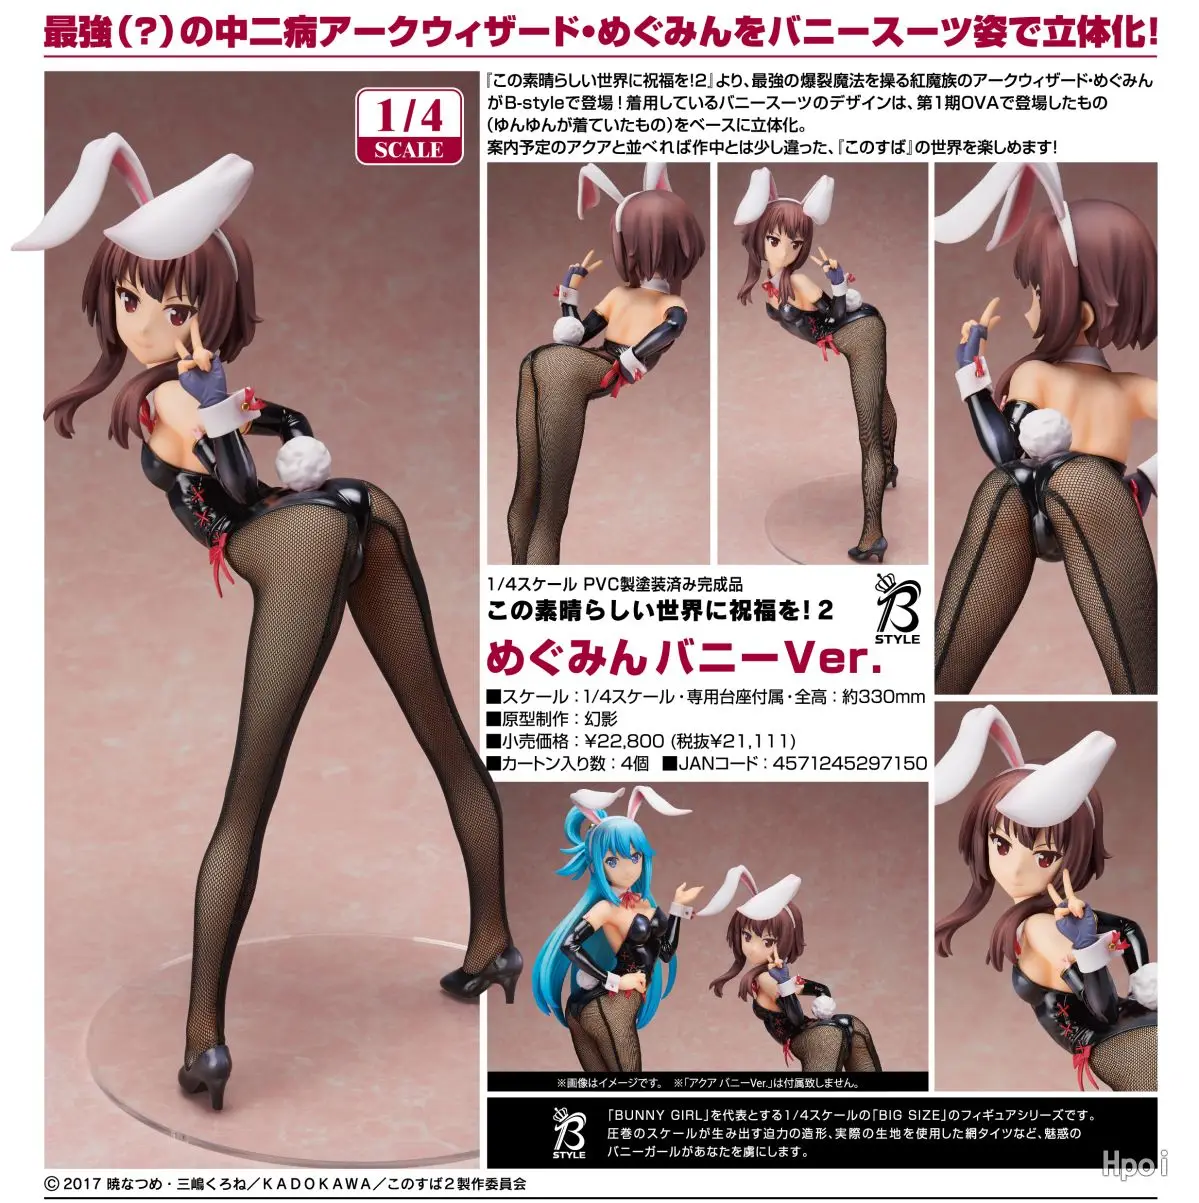 

Anime Kono Subarashii Sekai ni Shukufuku o! Megumin Aqua Akua PVC Action Figure Toy Adult Sexy Girl Collection Model Doll Gifts